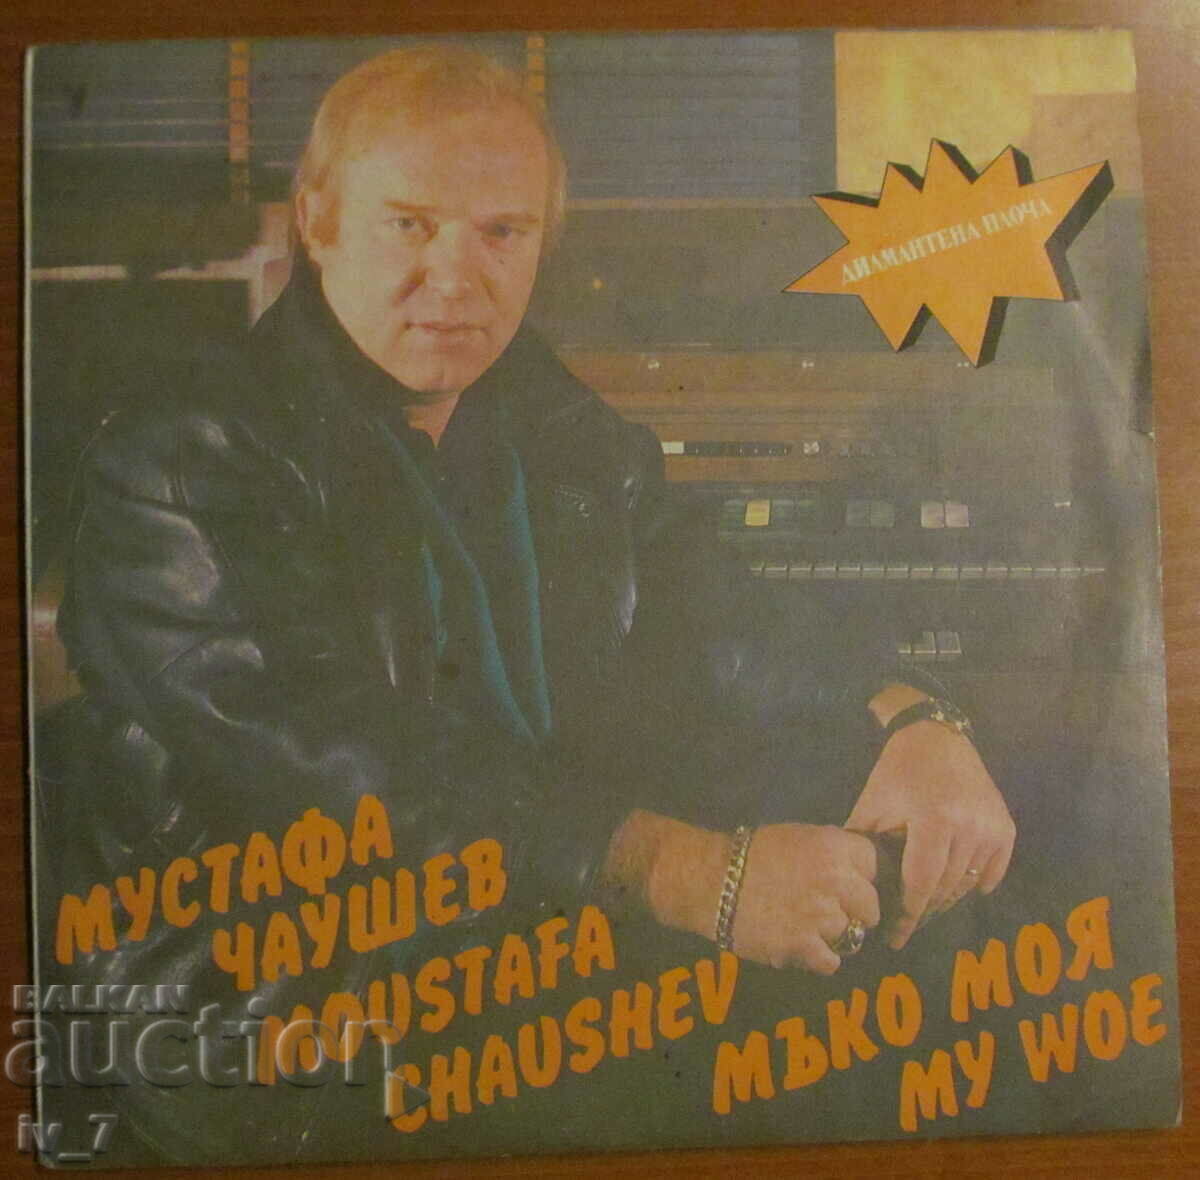 RECORD - MUSTAFA CHAUSHEV - MY SOFT, format mare